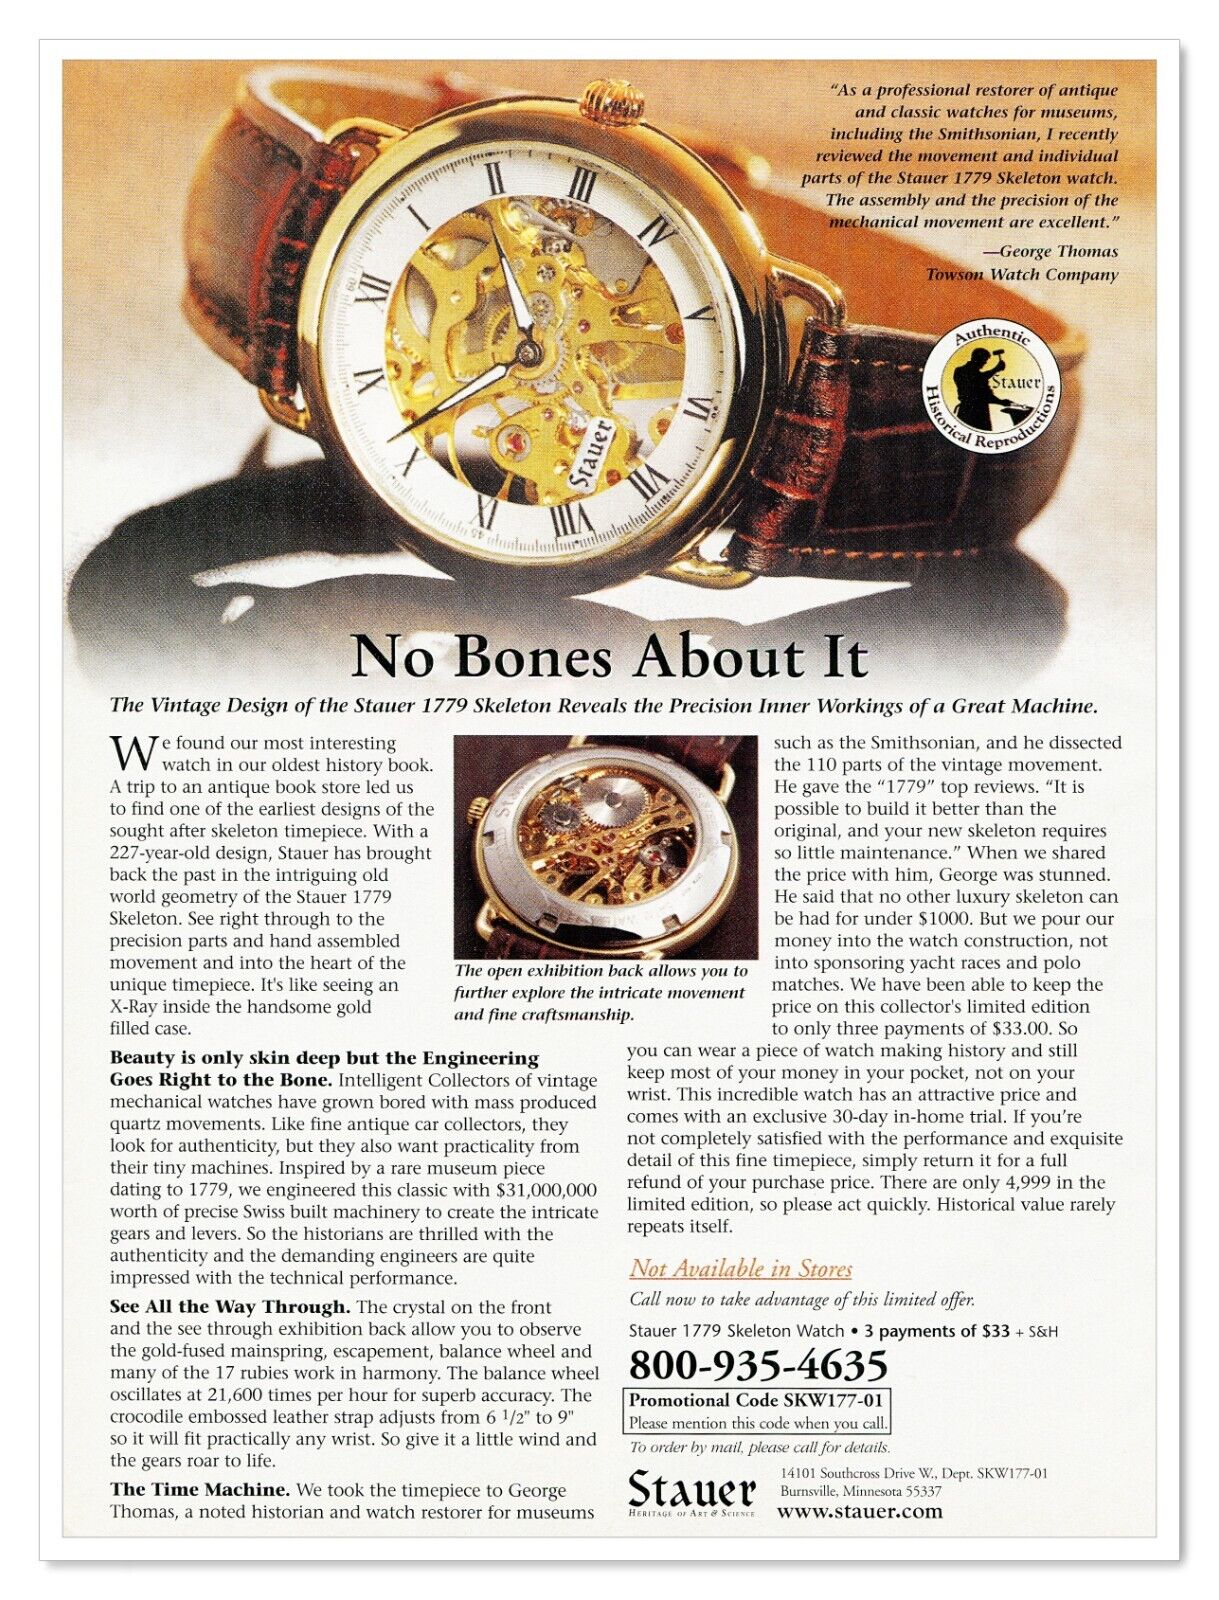 Stauer 1779 Skeleton Watch No Bones About It 2007 Full-Page Print Magazine Ad